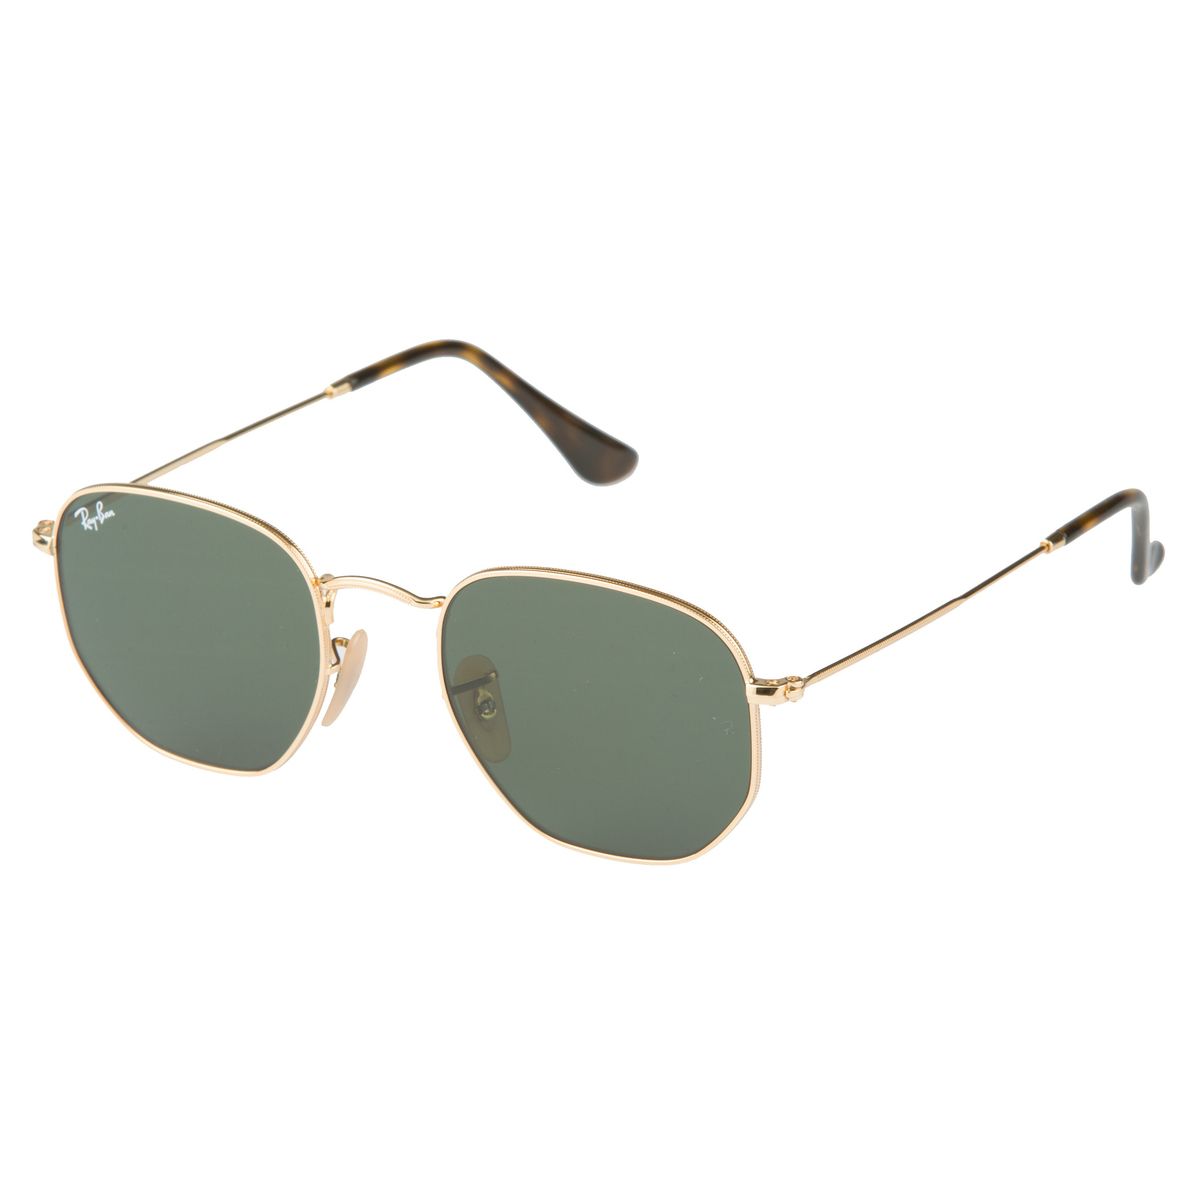 Hexagonal Flat Sunglasses RB3548N 001 51 - size 51